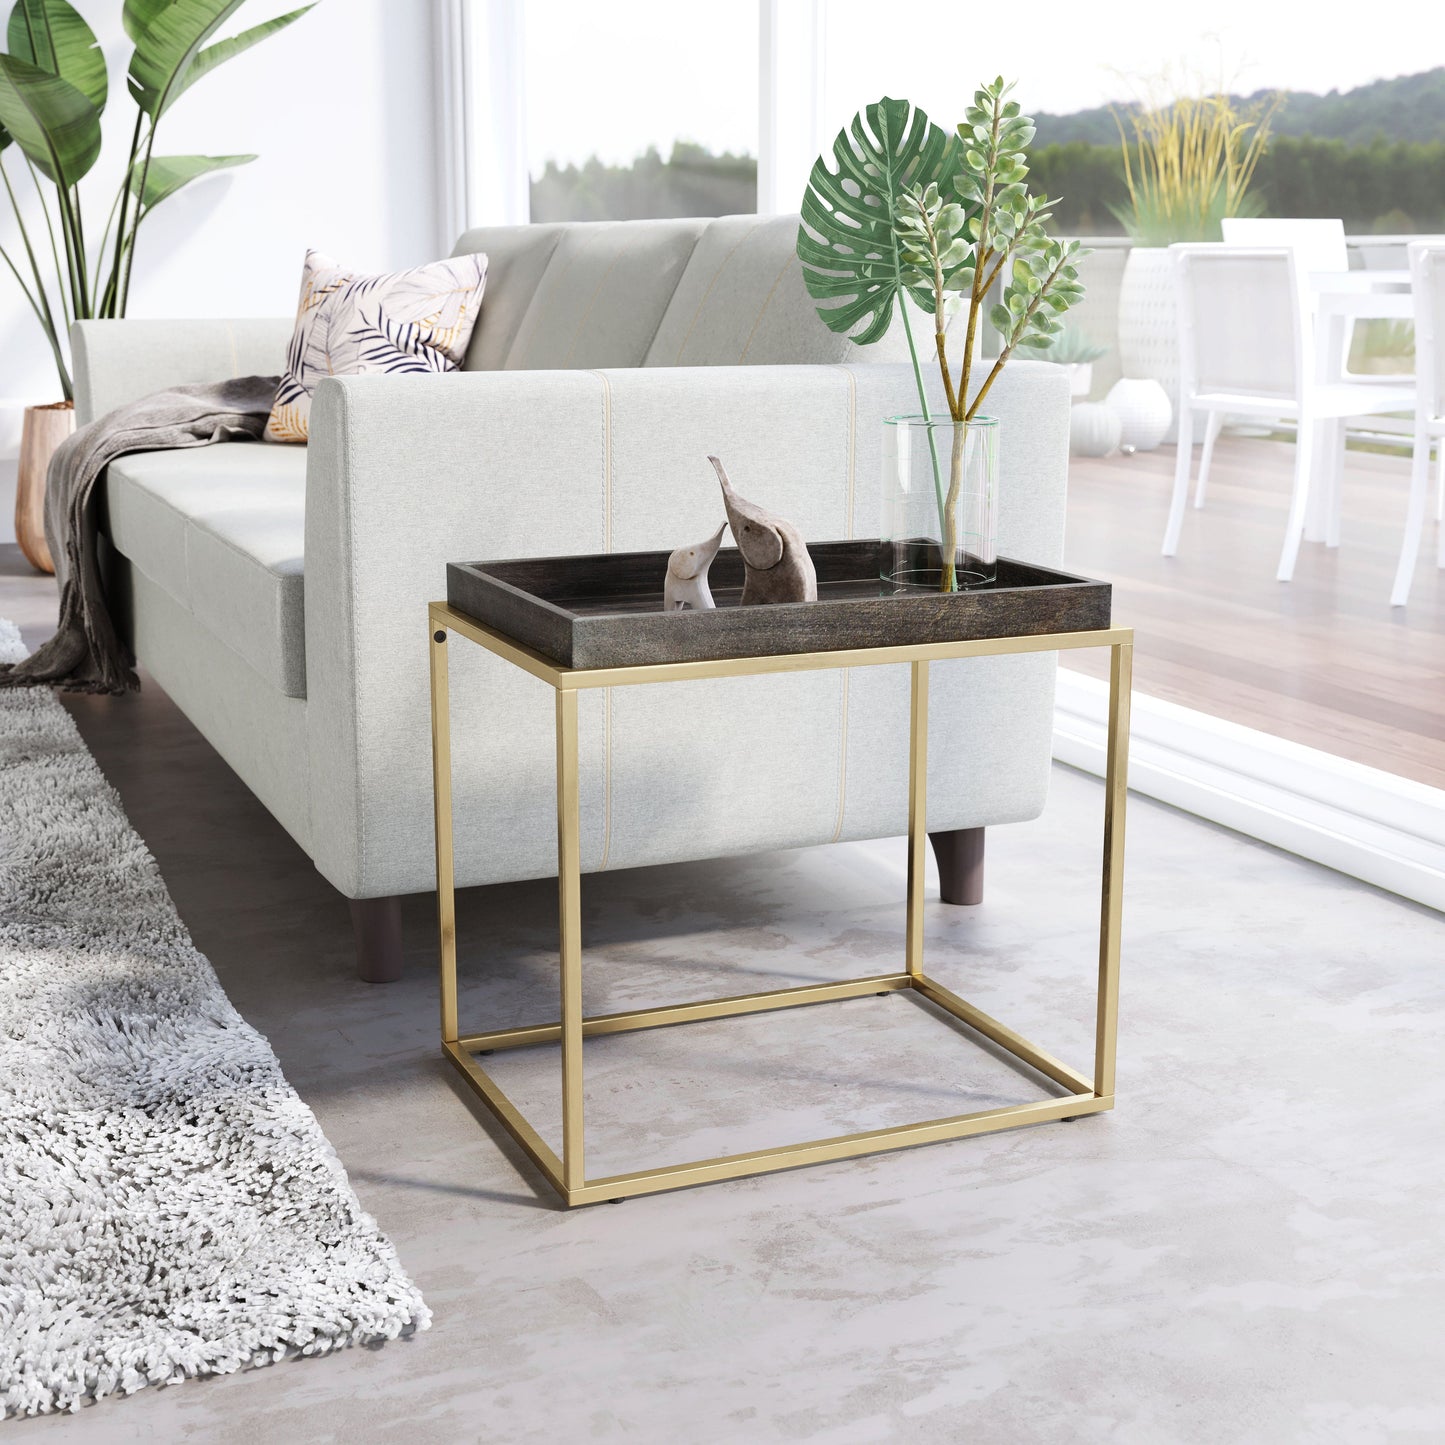 Glam table in modern living setting 